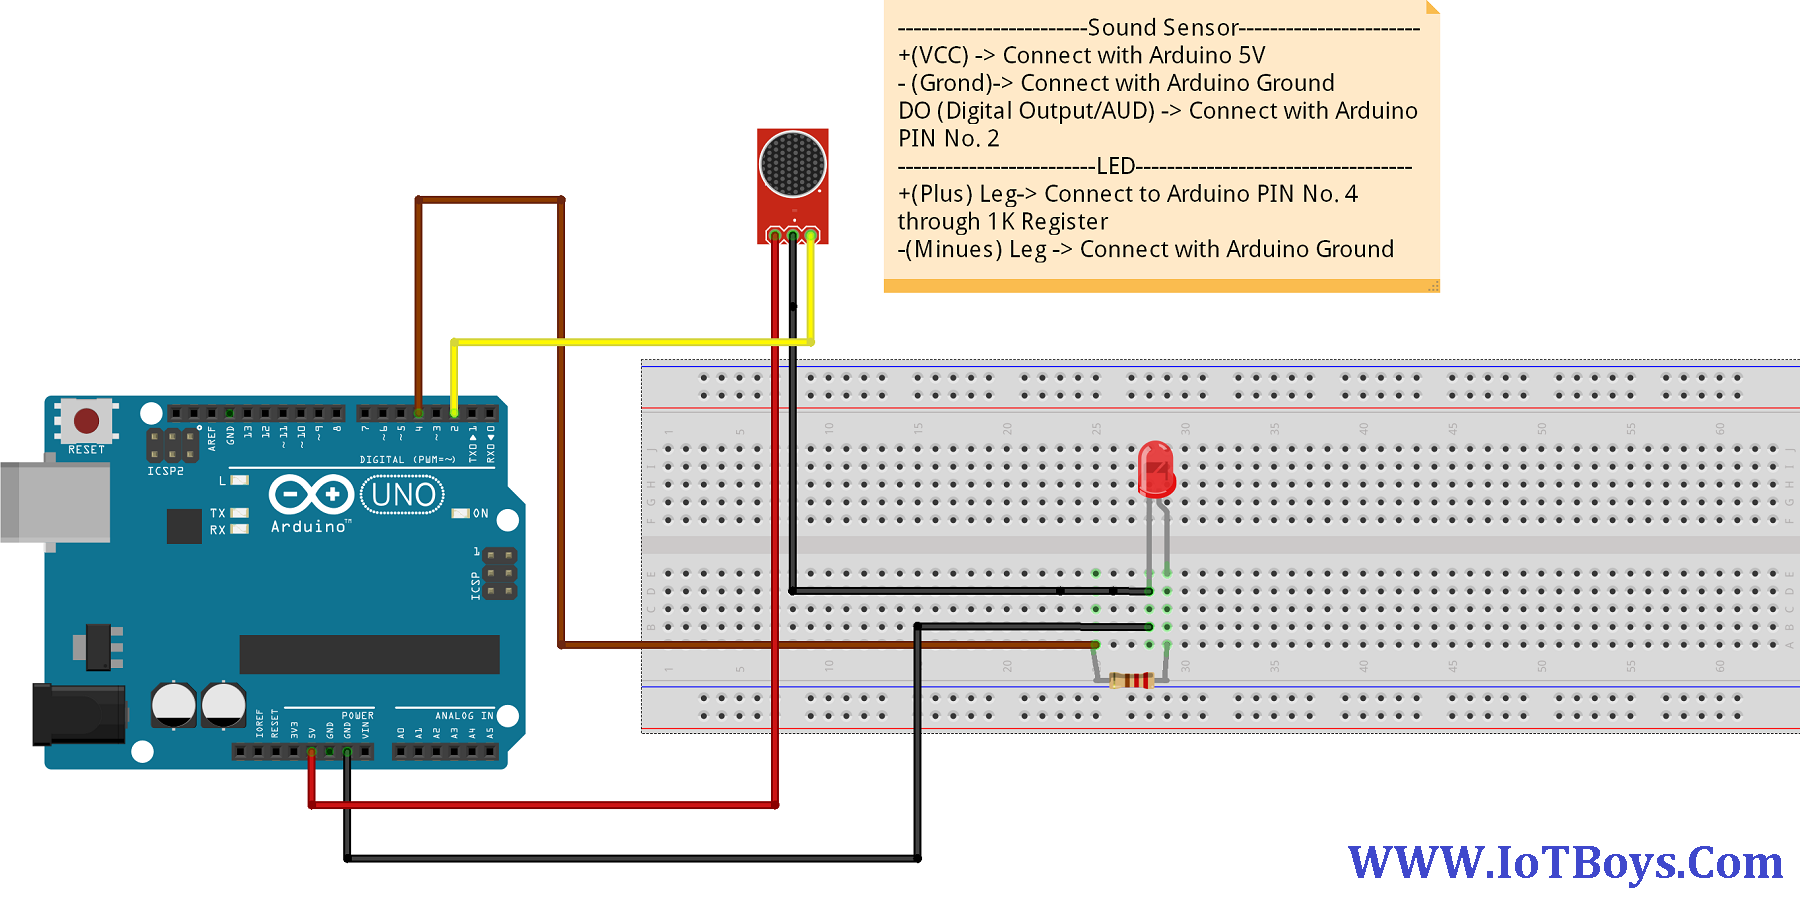 التحكم ب Sound Sensor باستخدام Arduino ومصباح Led اتومز لاب Atoms Lab